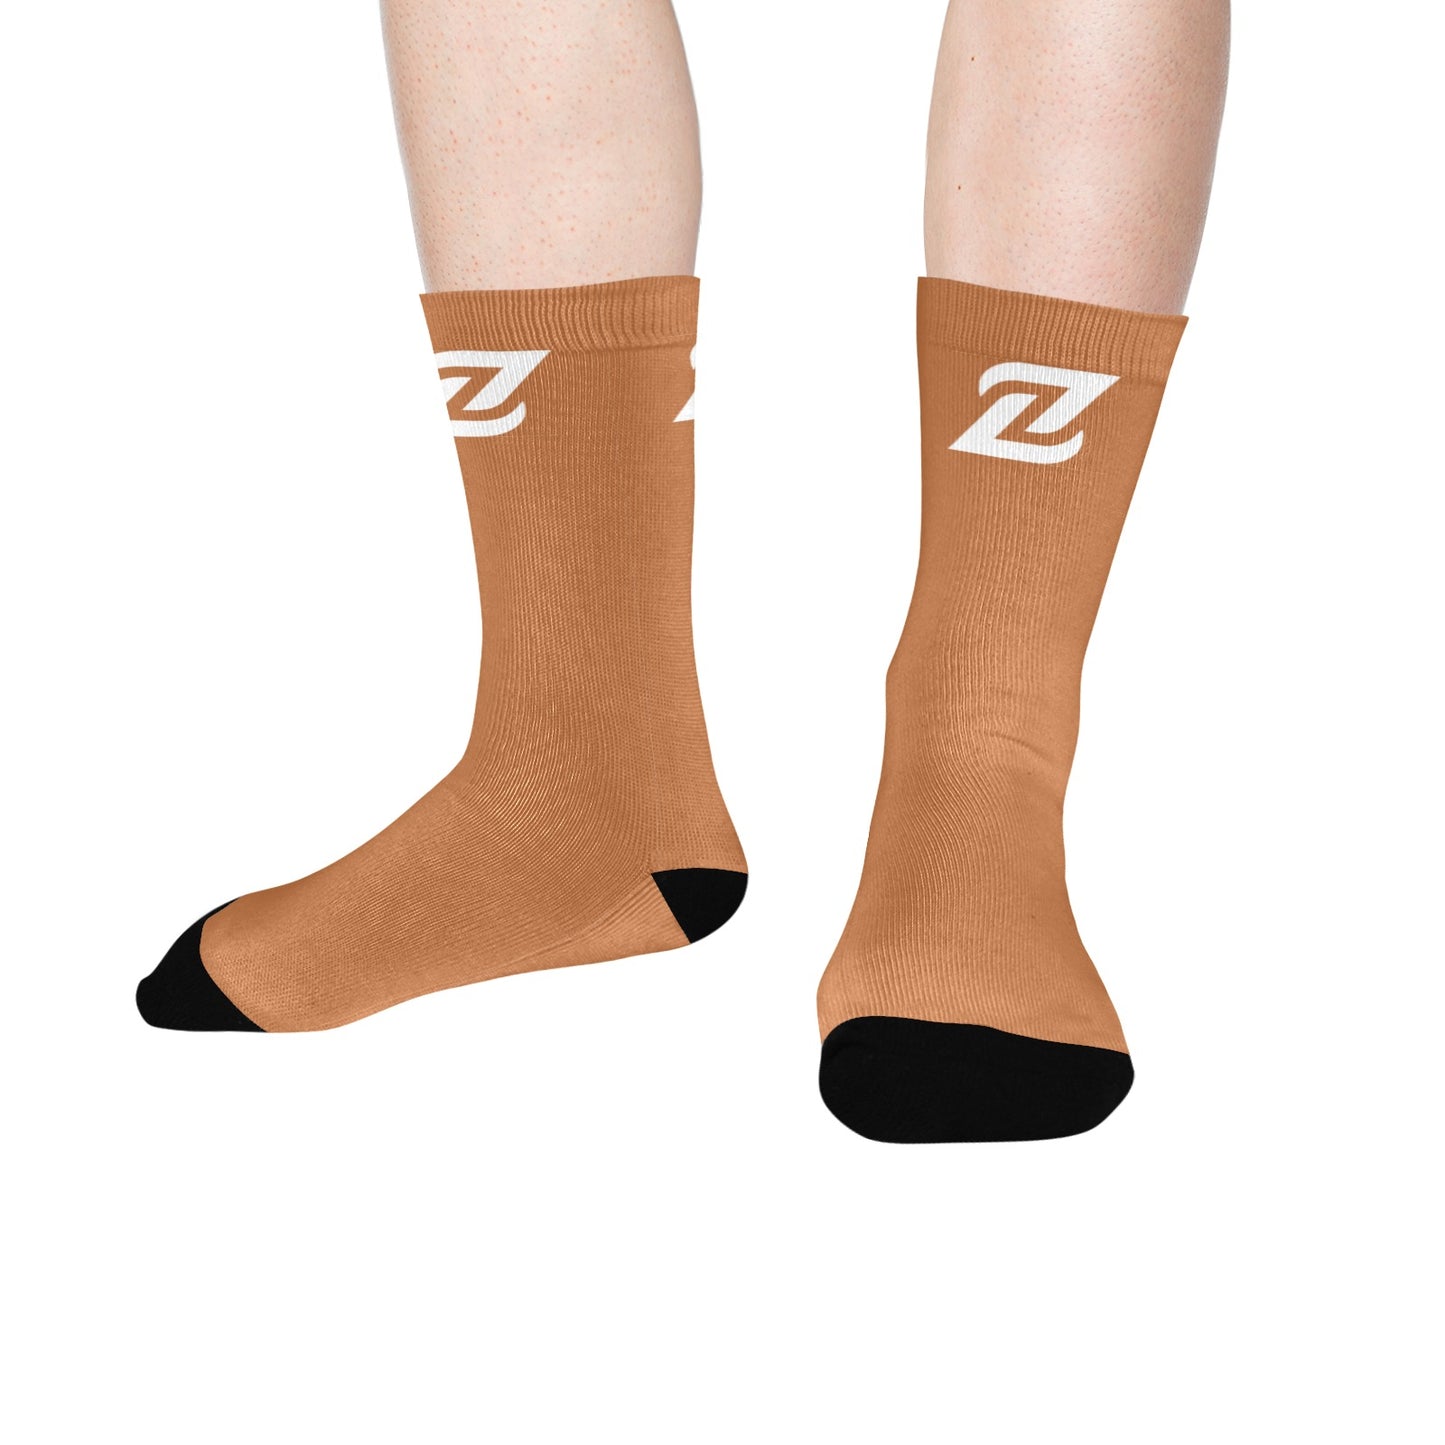 Zen Socks - Nude Brown Tan